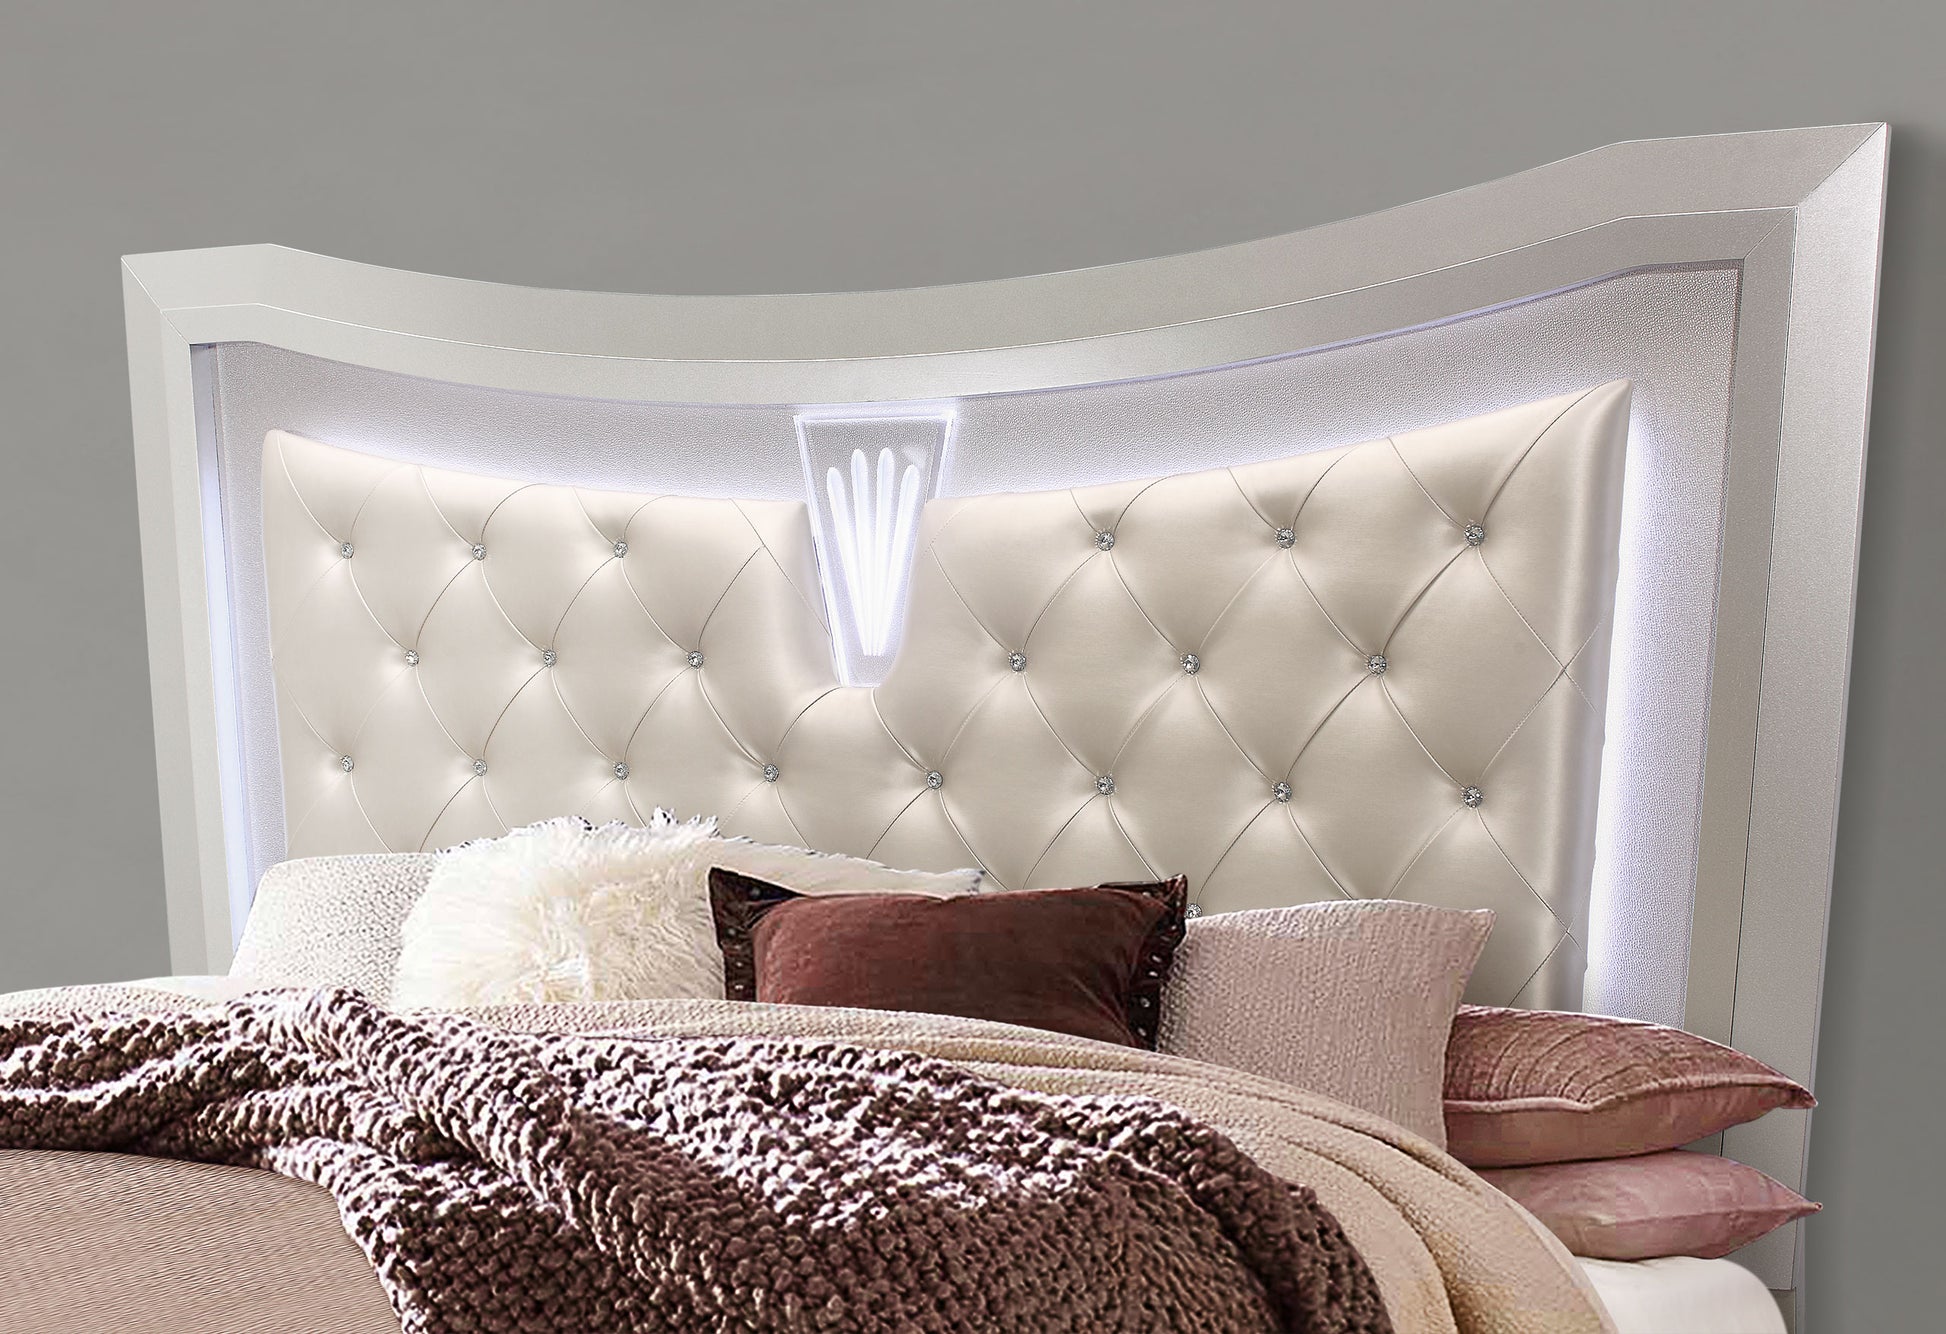 Paris White Bedroom Set with Lights GLOBAL FURNITURE